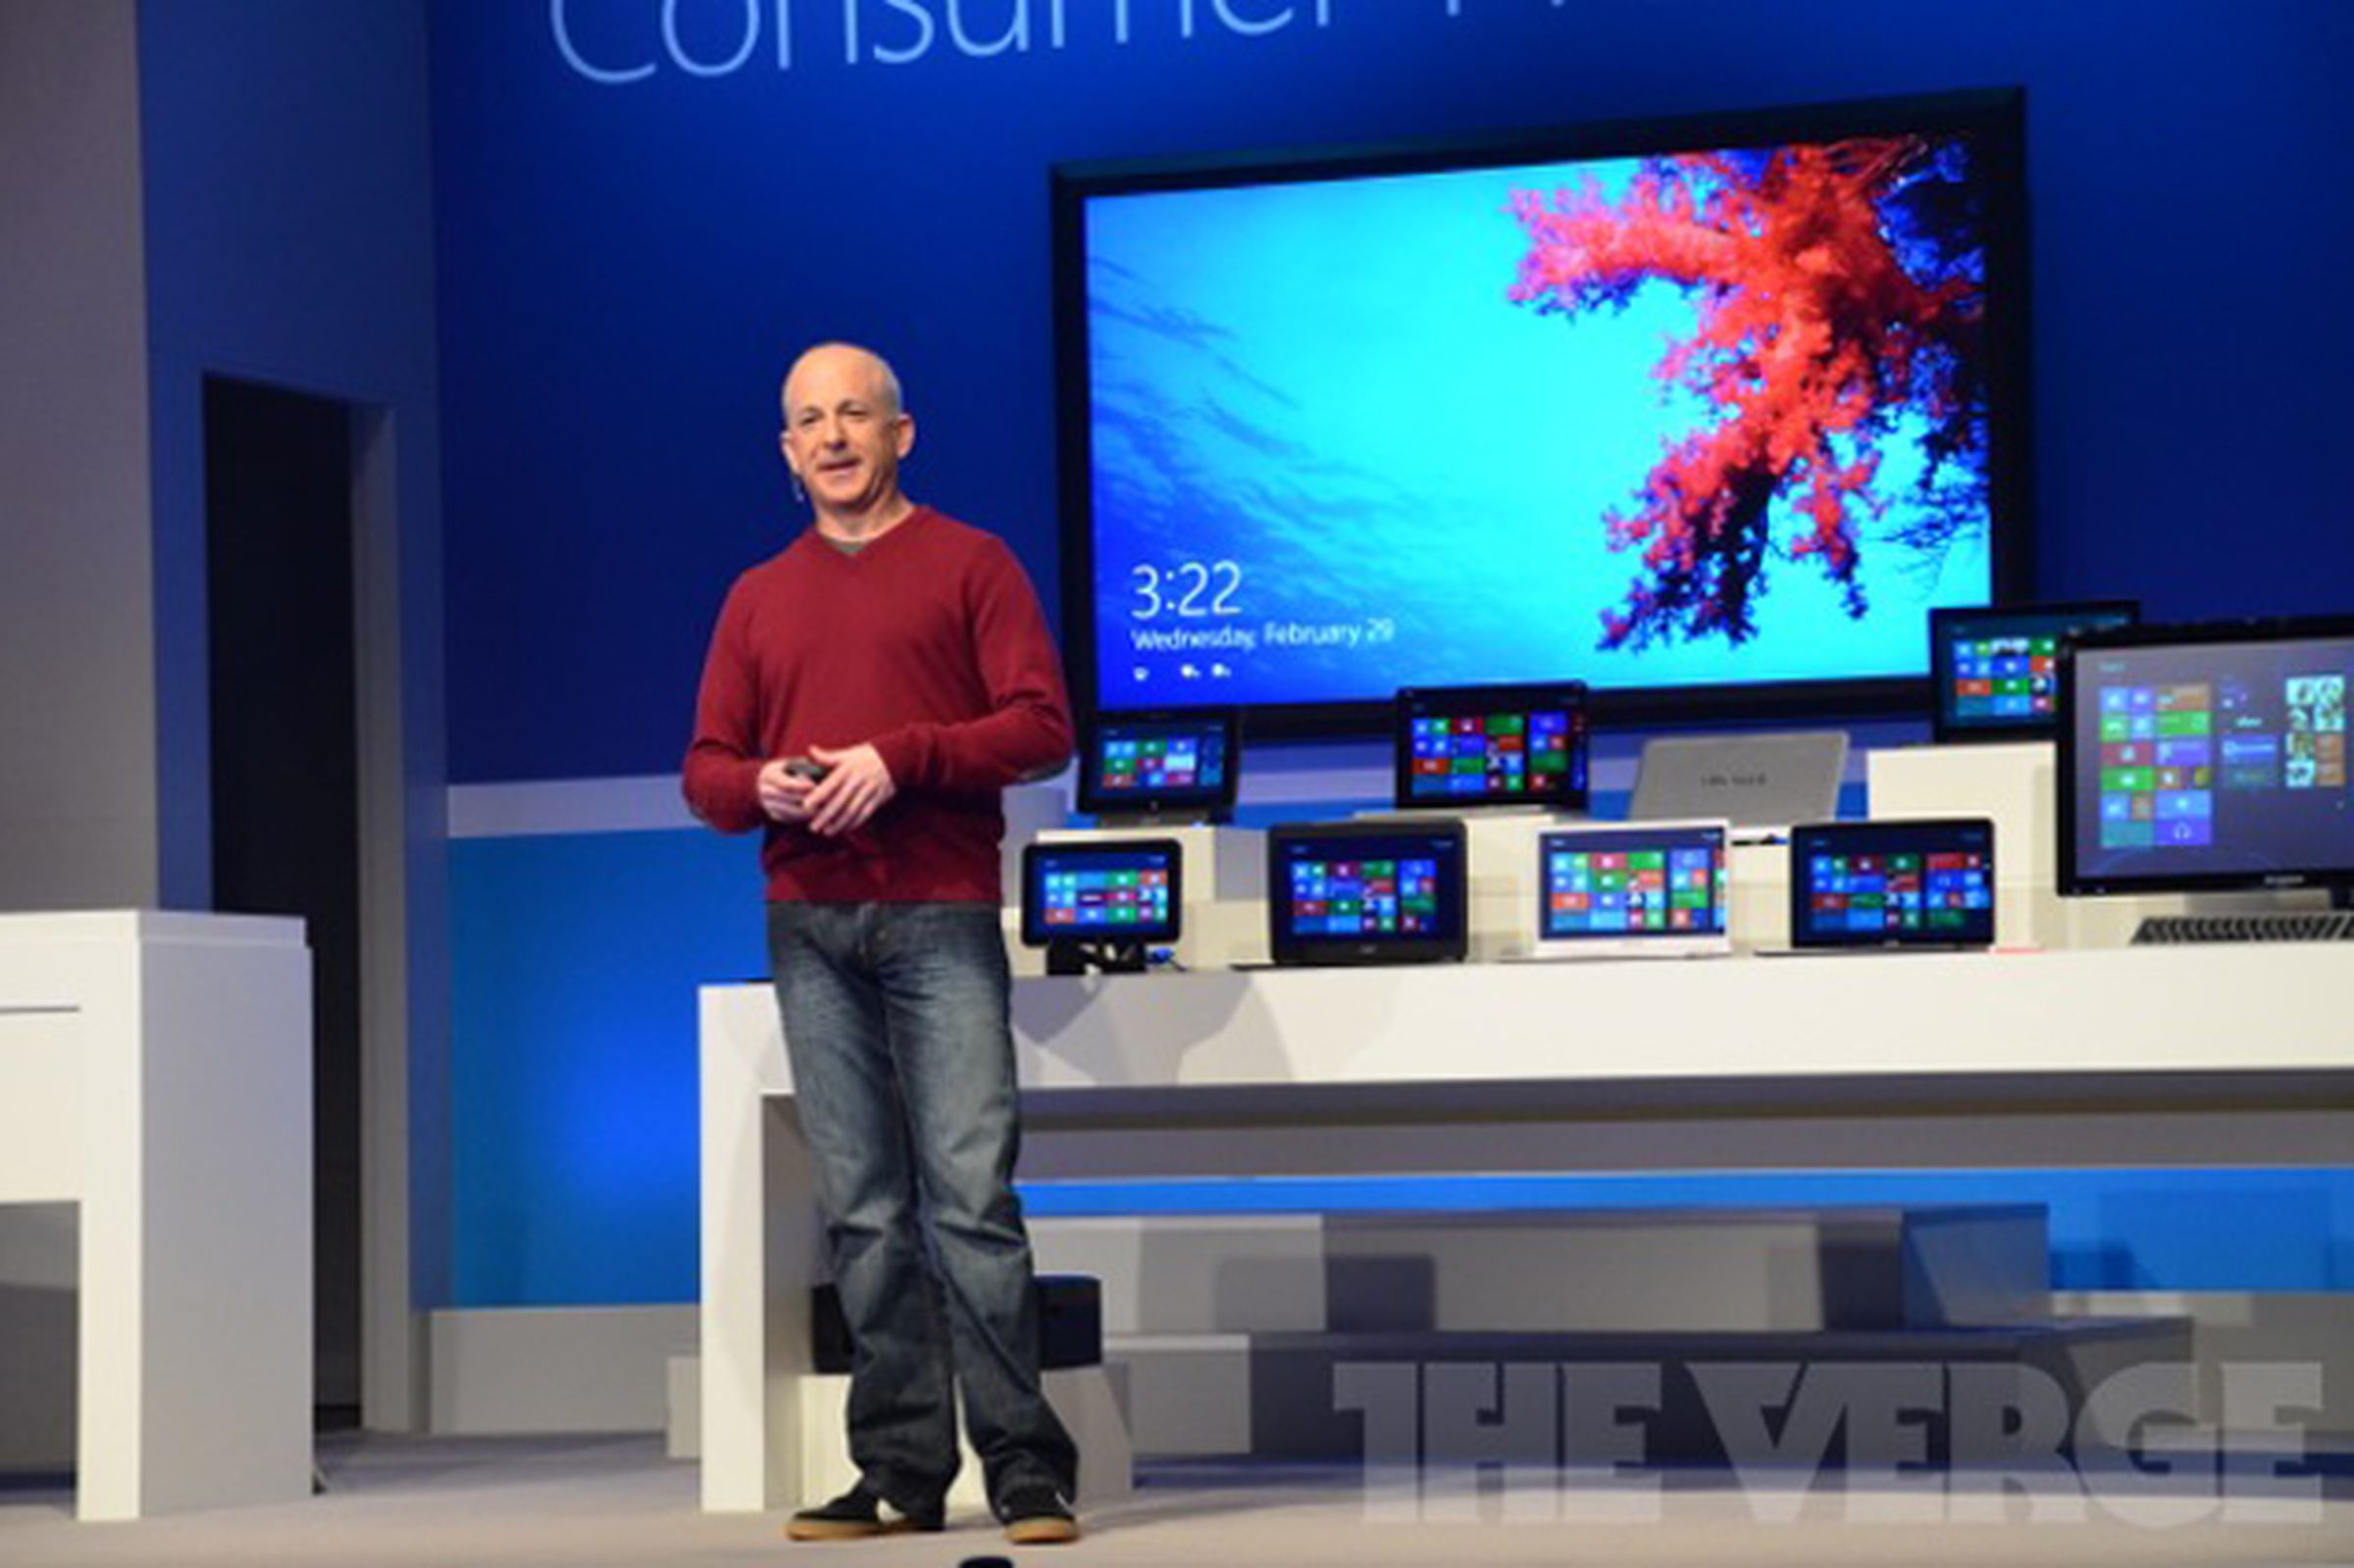 Windows 8 Consumer Preview Event Steven Sinofsky